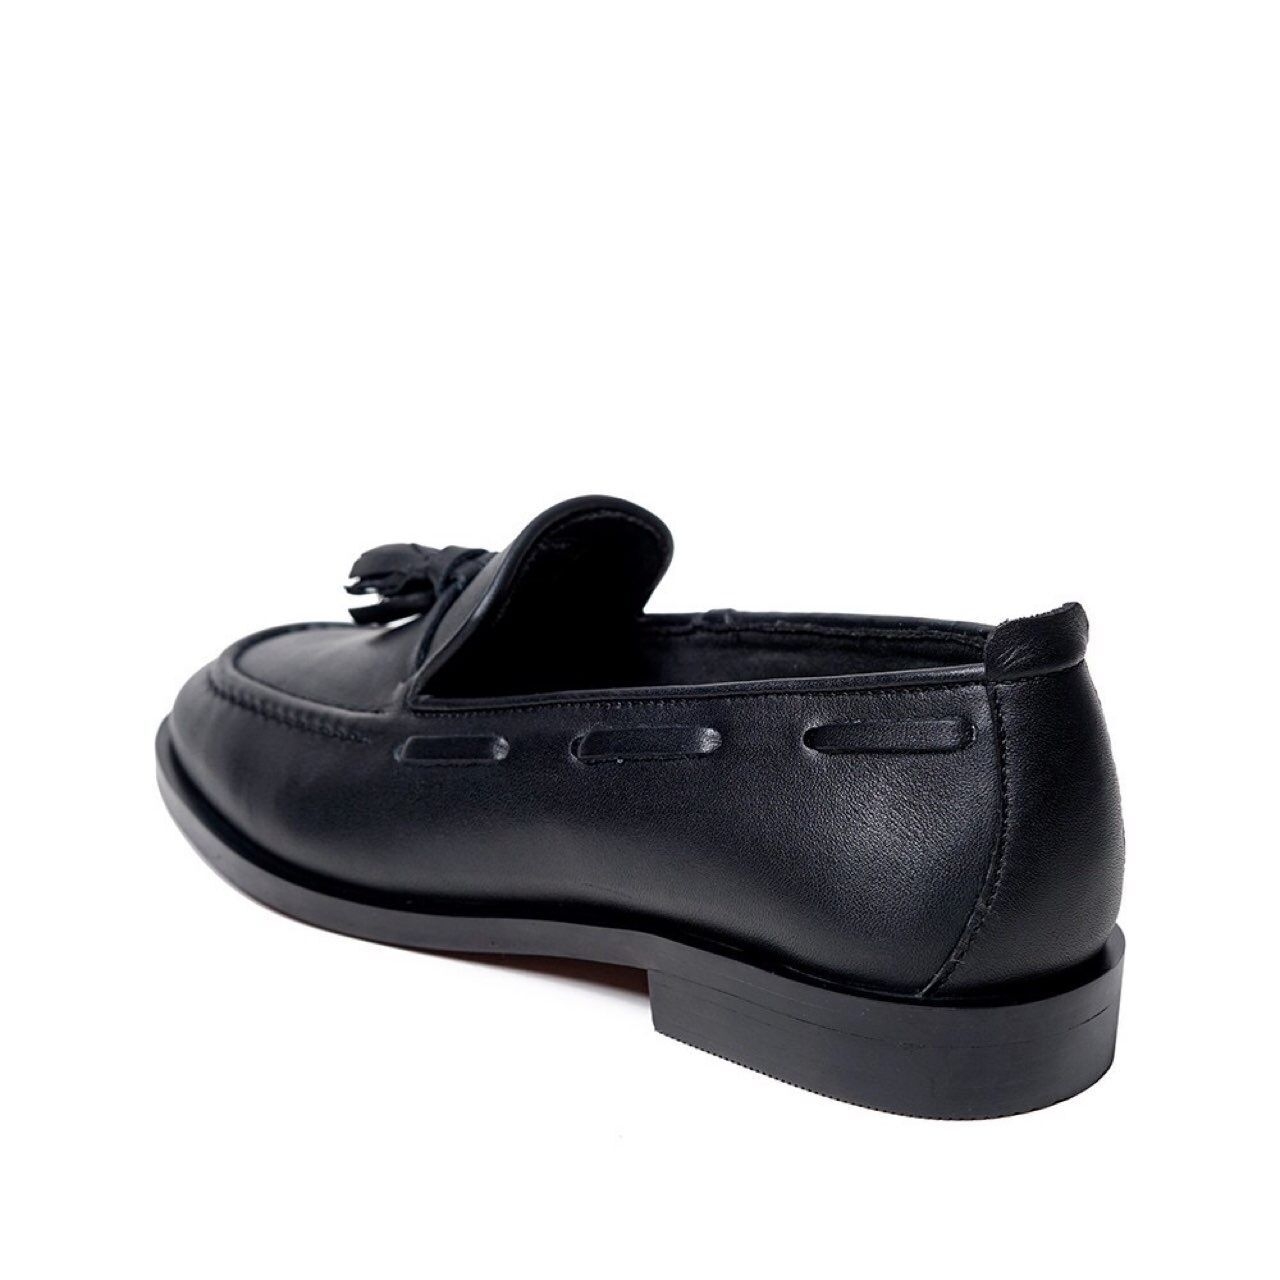 Prabu Black Loafers